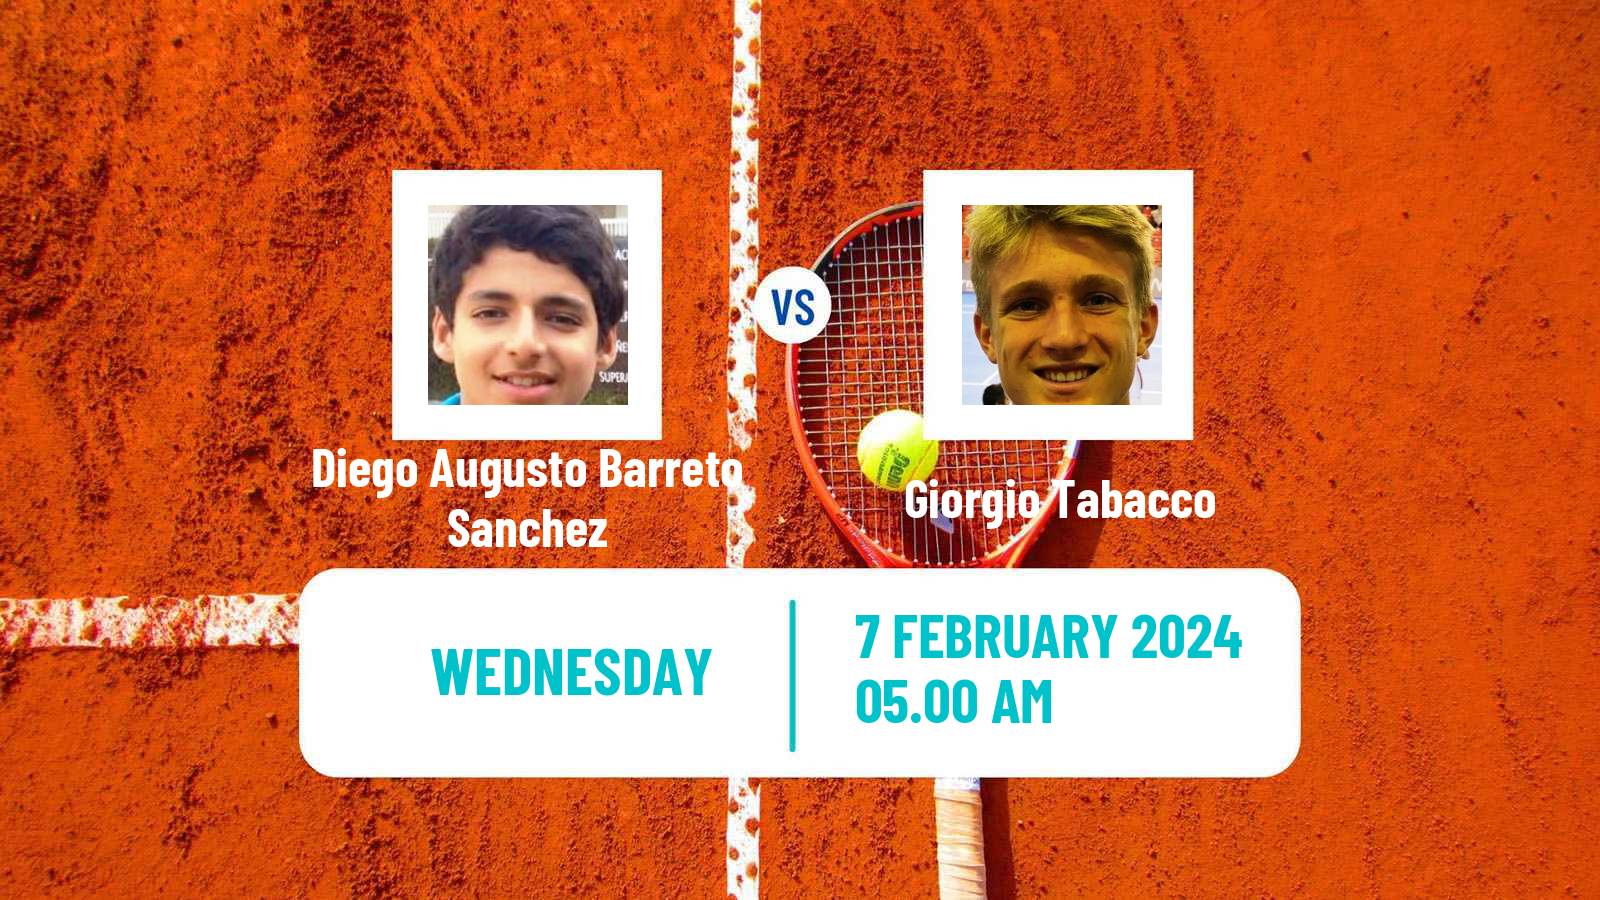 Tennis ITF M15 Monastir 6 Men Diego Augusto Barreto Sanchez - Giorgio Tabacco